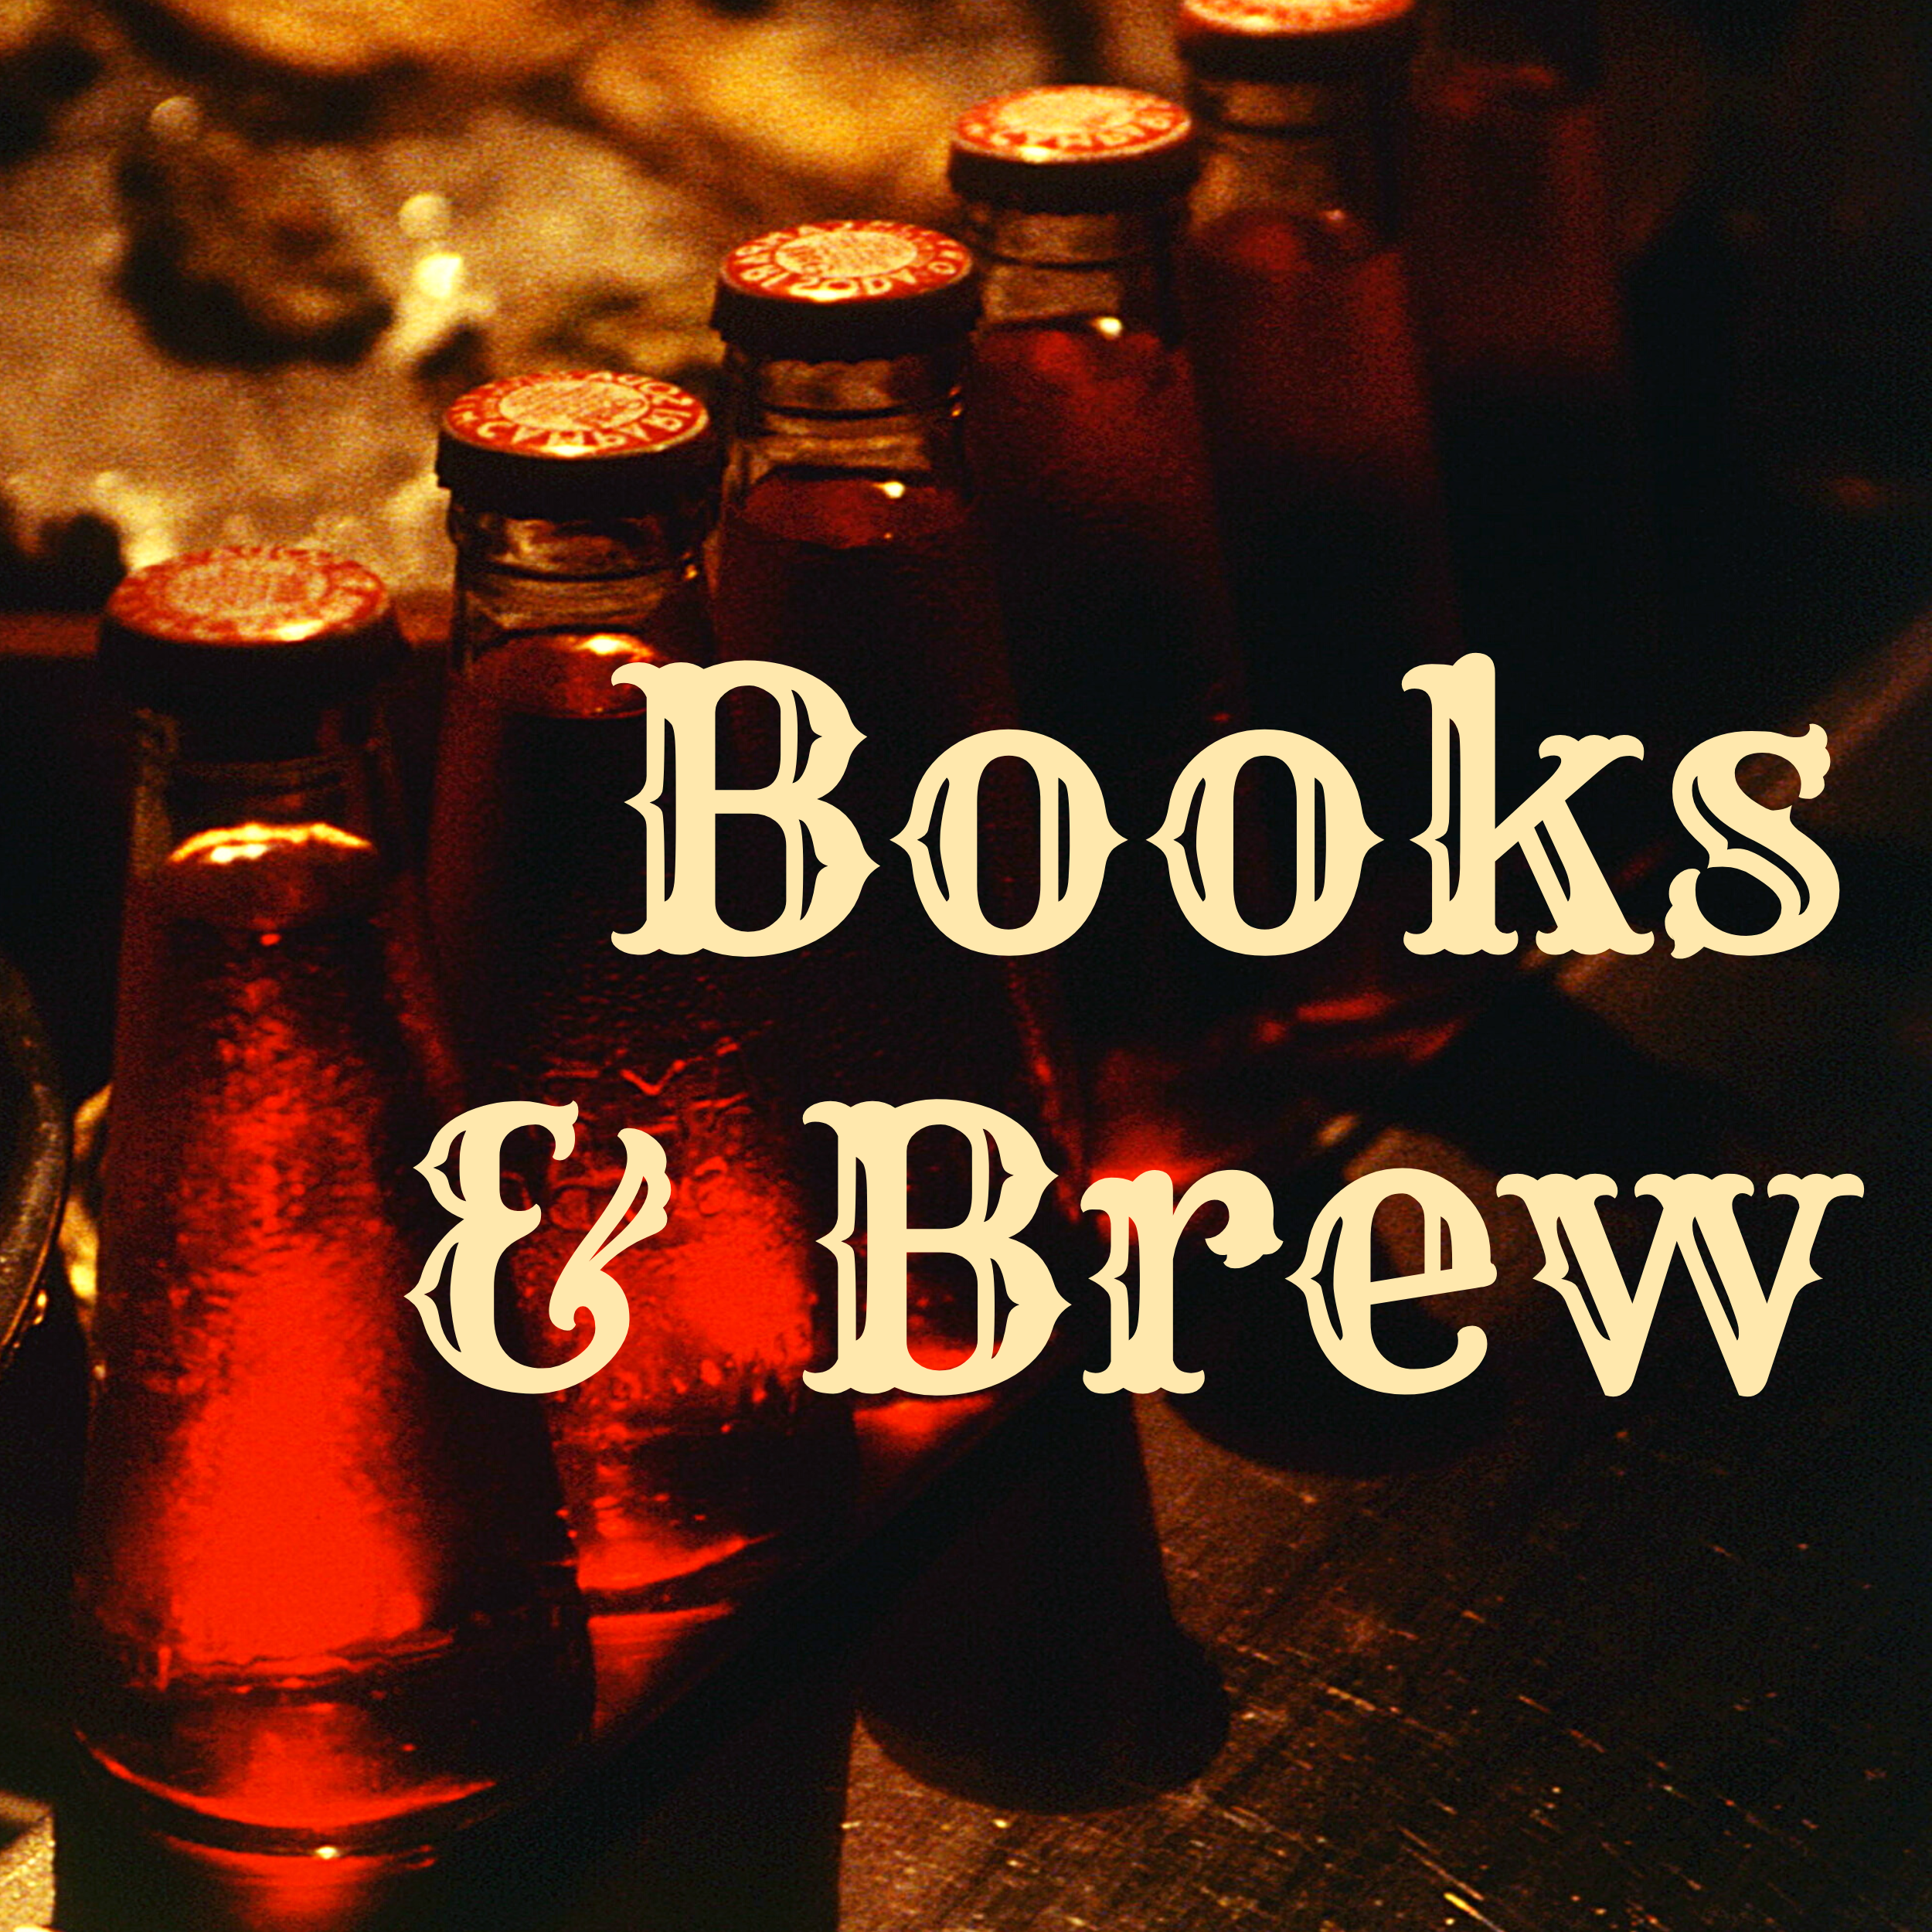 Books & Brew. Brown bottles of beer in dramatic lighting.